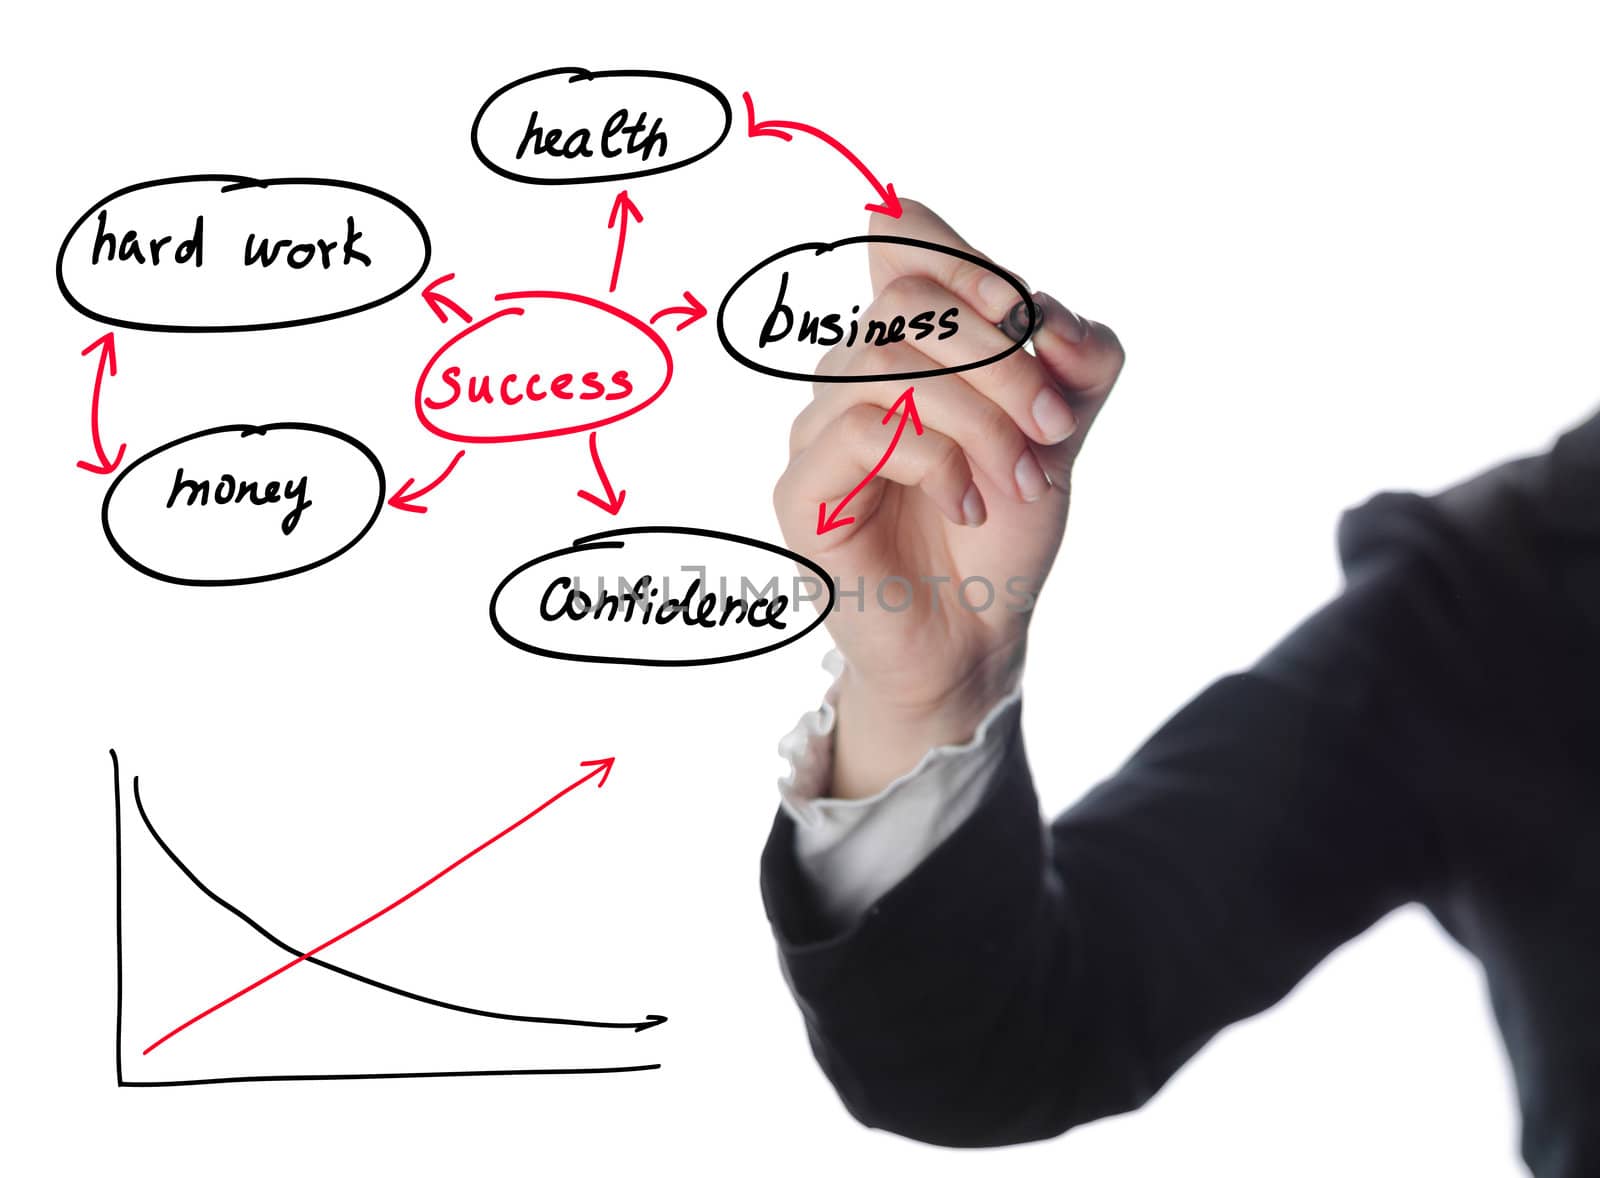 business man success concept by goal, vision, creativity, teamwork, focus, inspiration, training, etc.